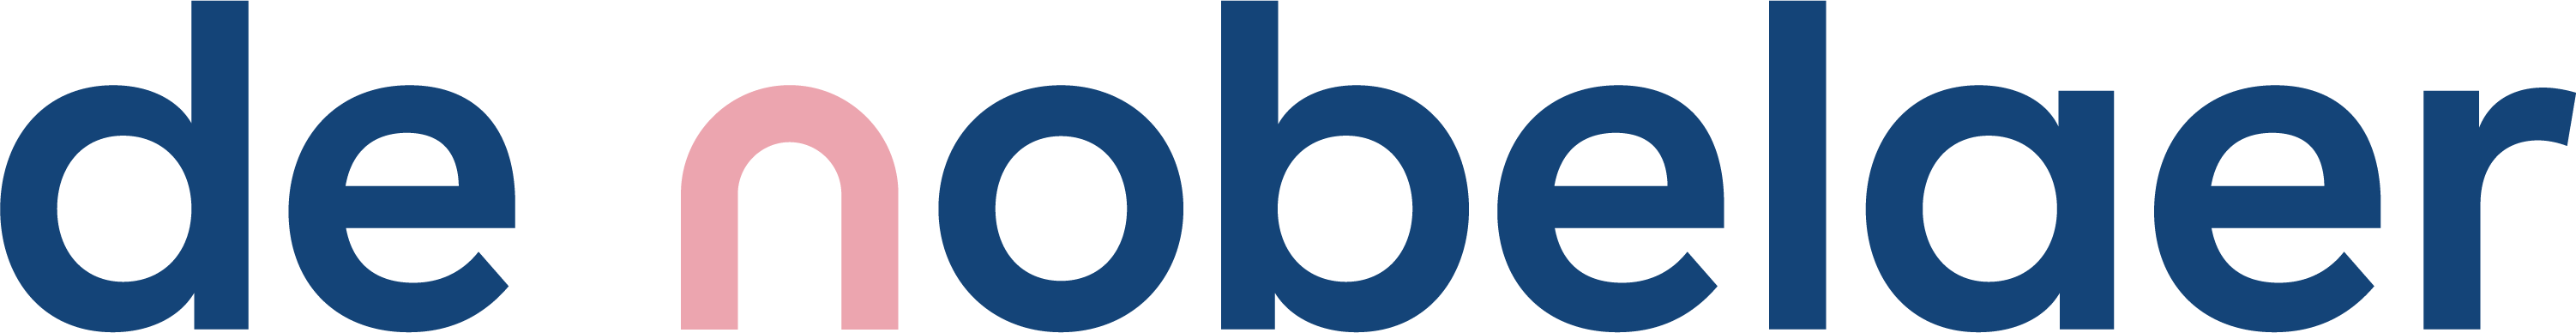 DeNobelaer_logo-donkerblauw-roze-rgb.png (33158 bytes)